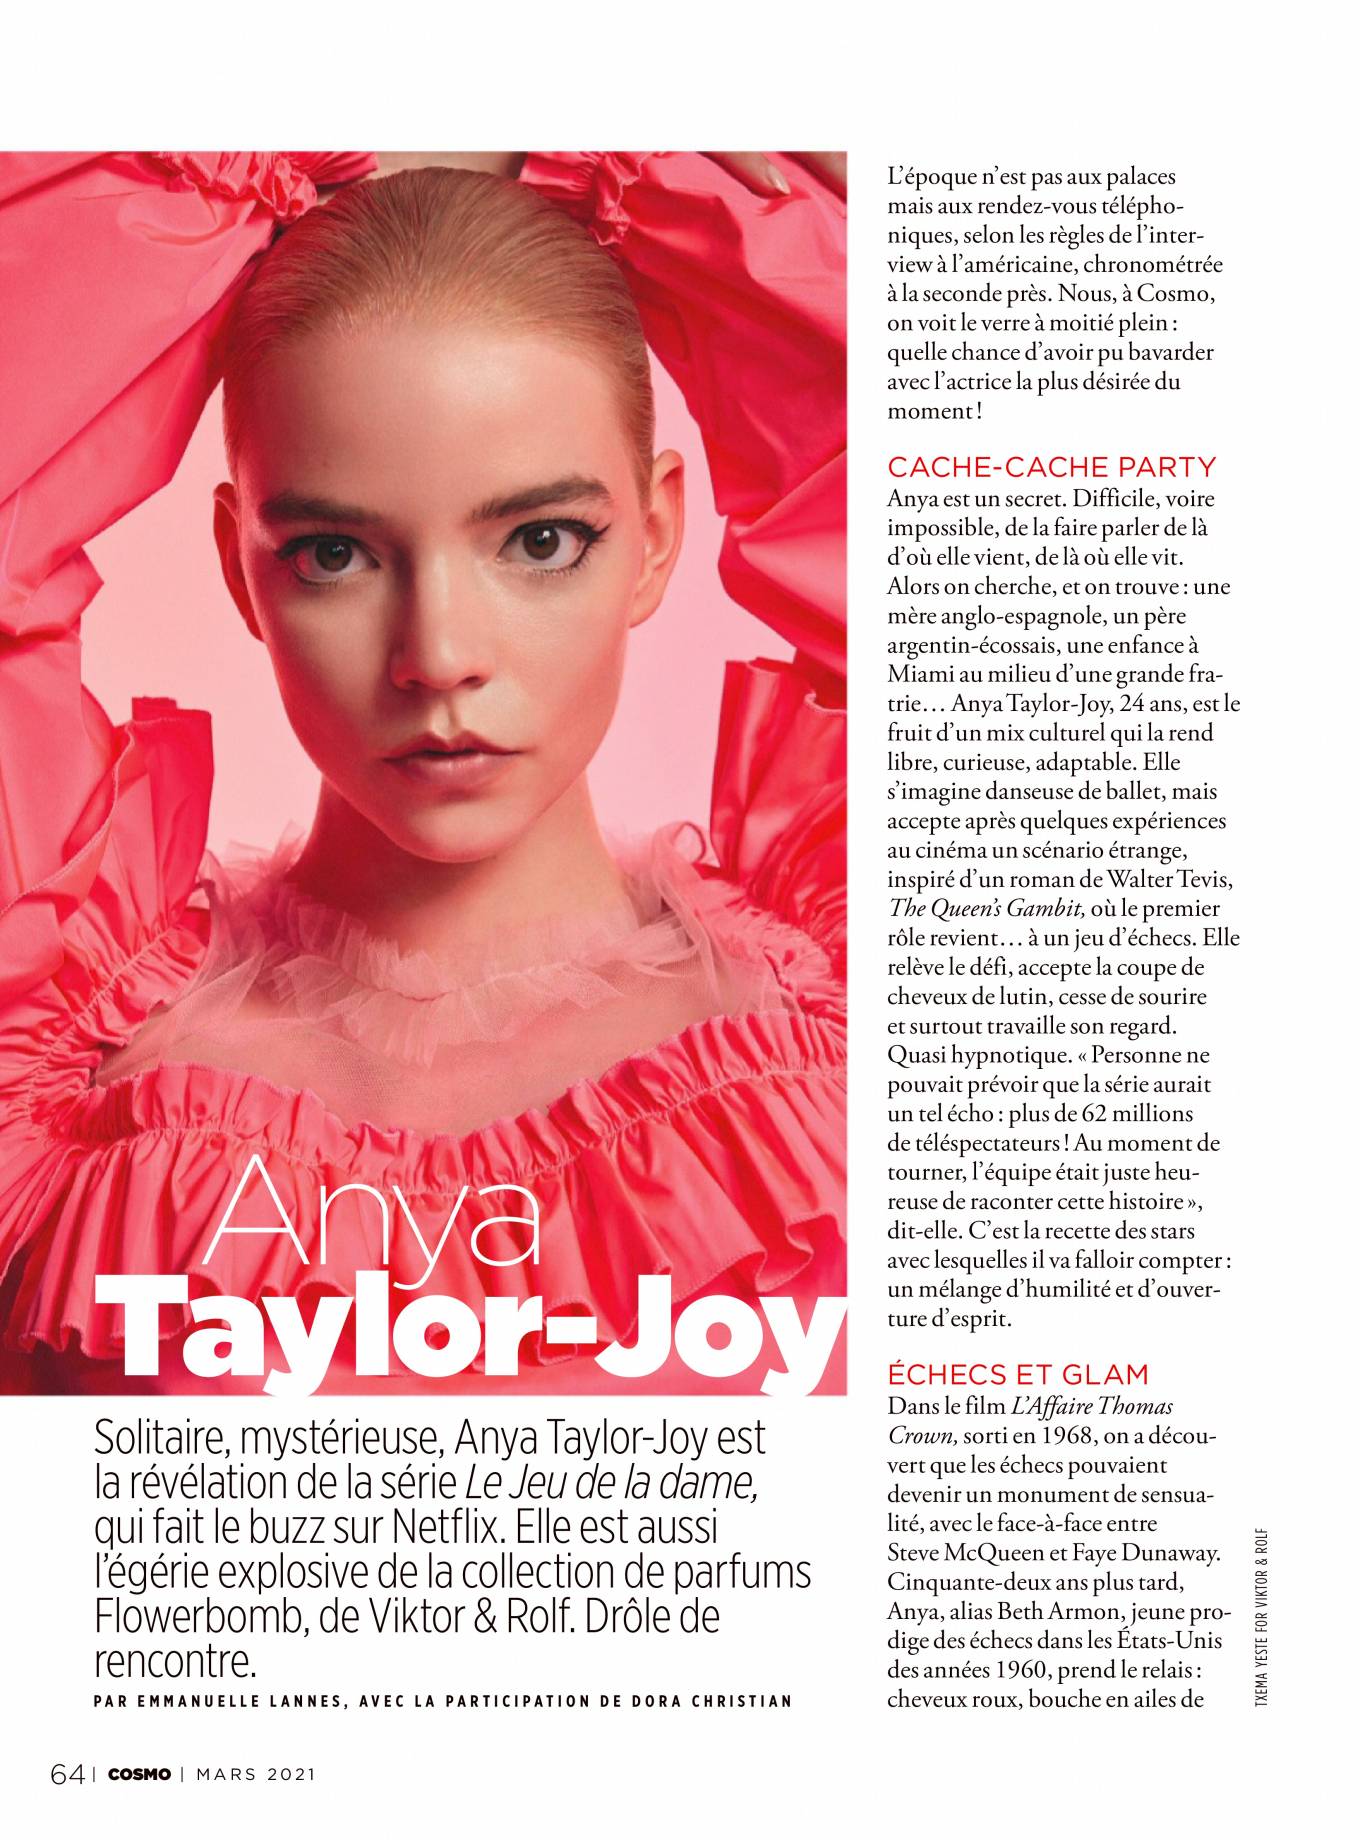 Anya Taylor-Joy - Cosmopolitan France2021